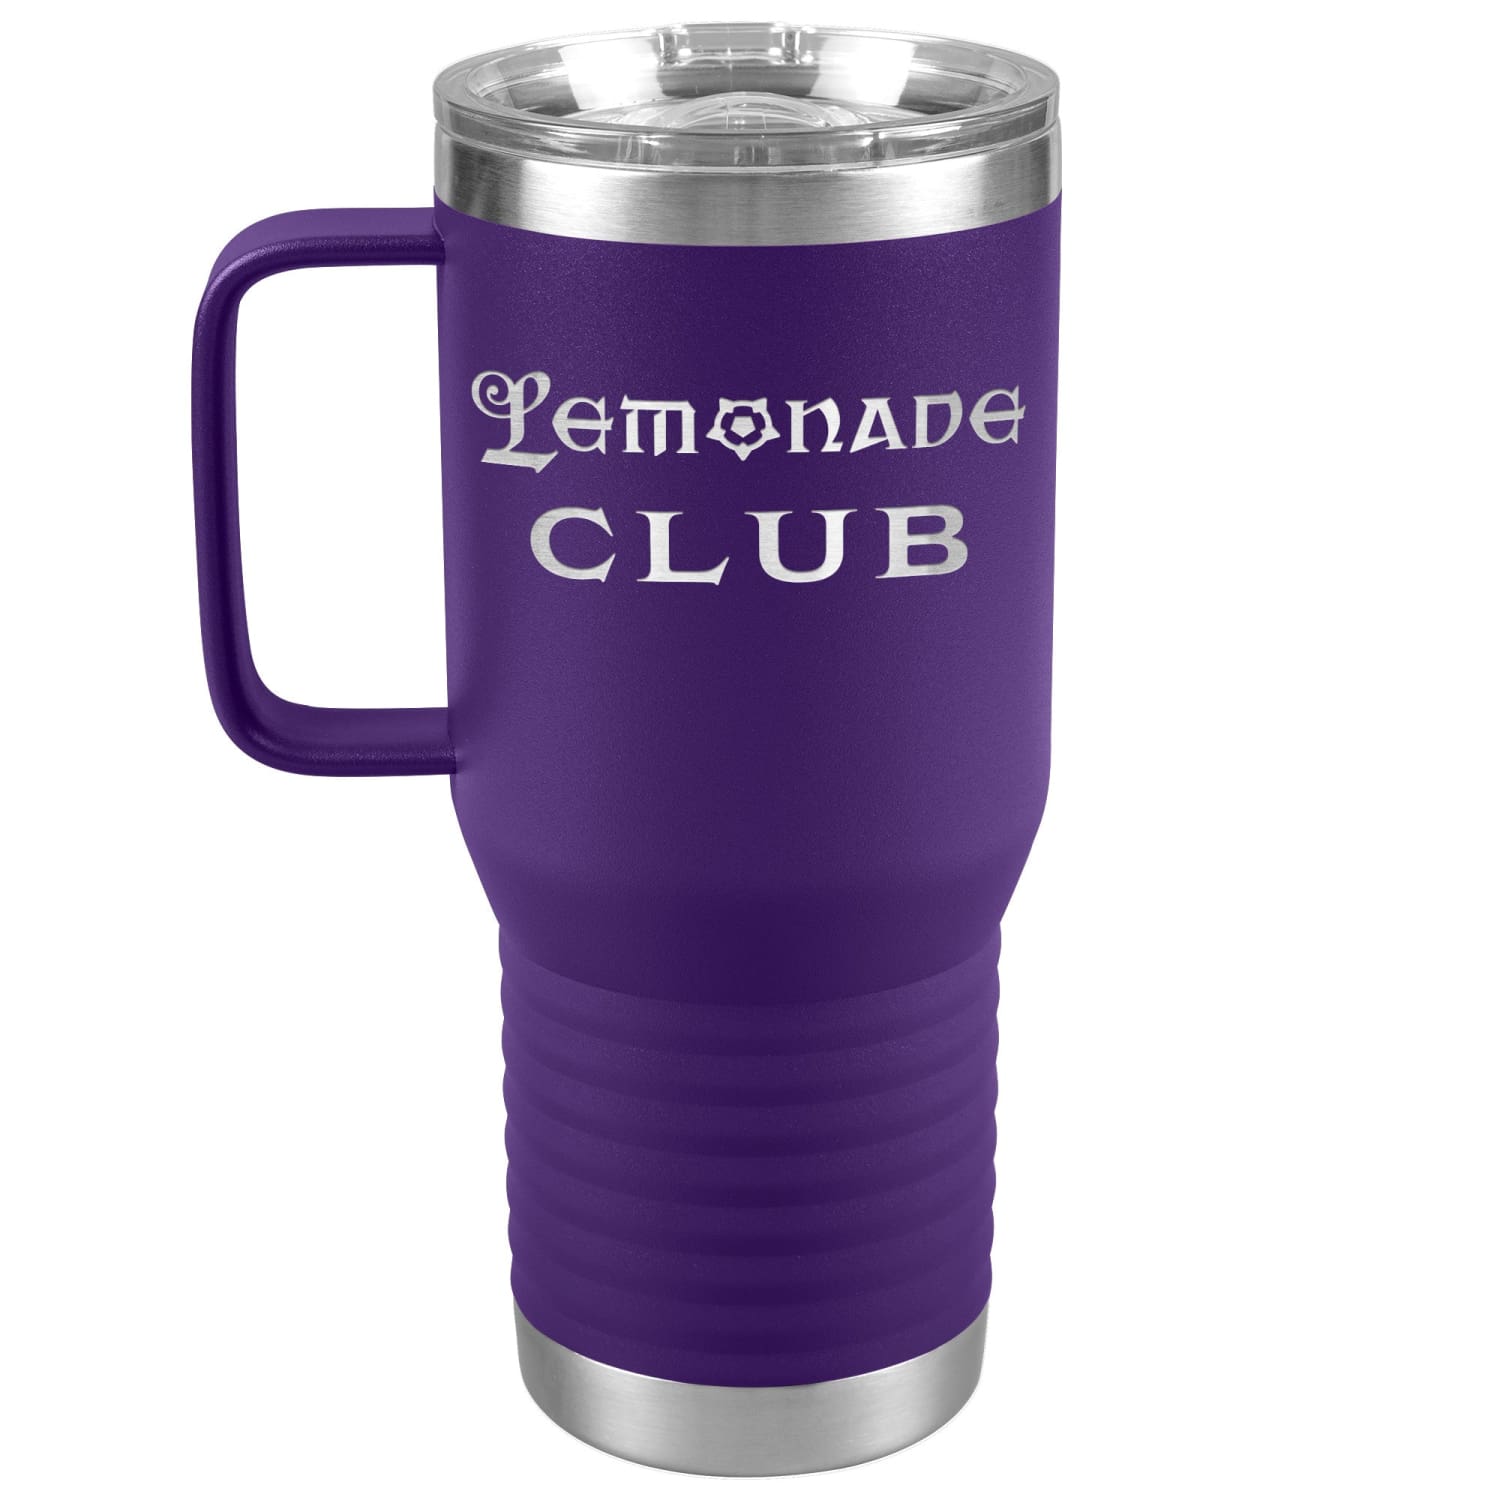 Arkenholdt Lemonade Club 20oz Travel Tumbler - Purple - Tumblers